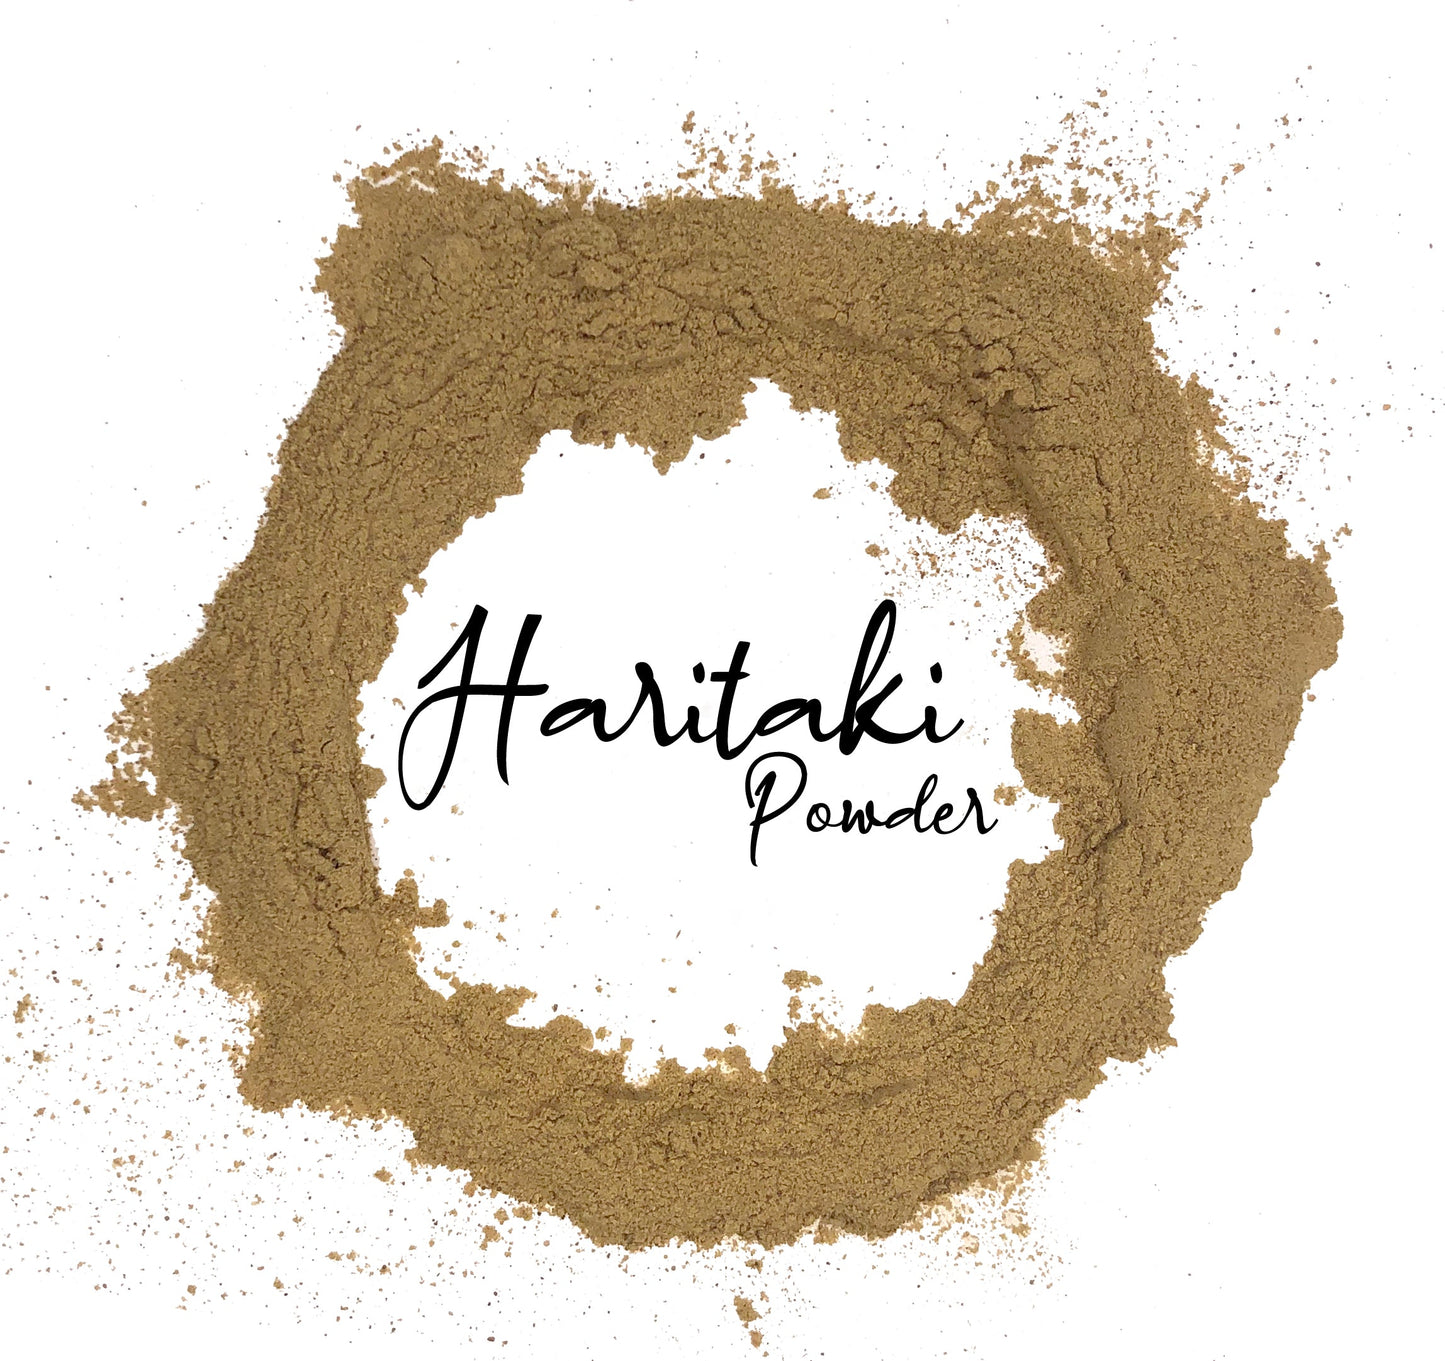 Wholesale Spices & Herbs - Haritaki Powder, Organic 4.4oz(125g) Jar